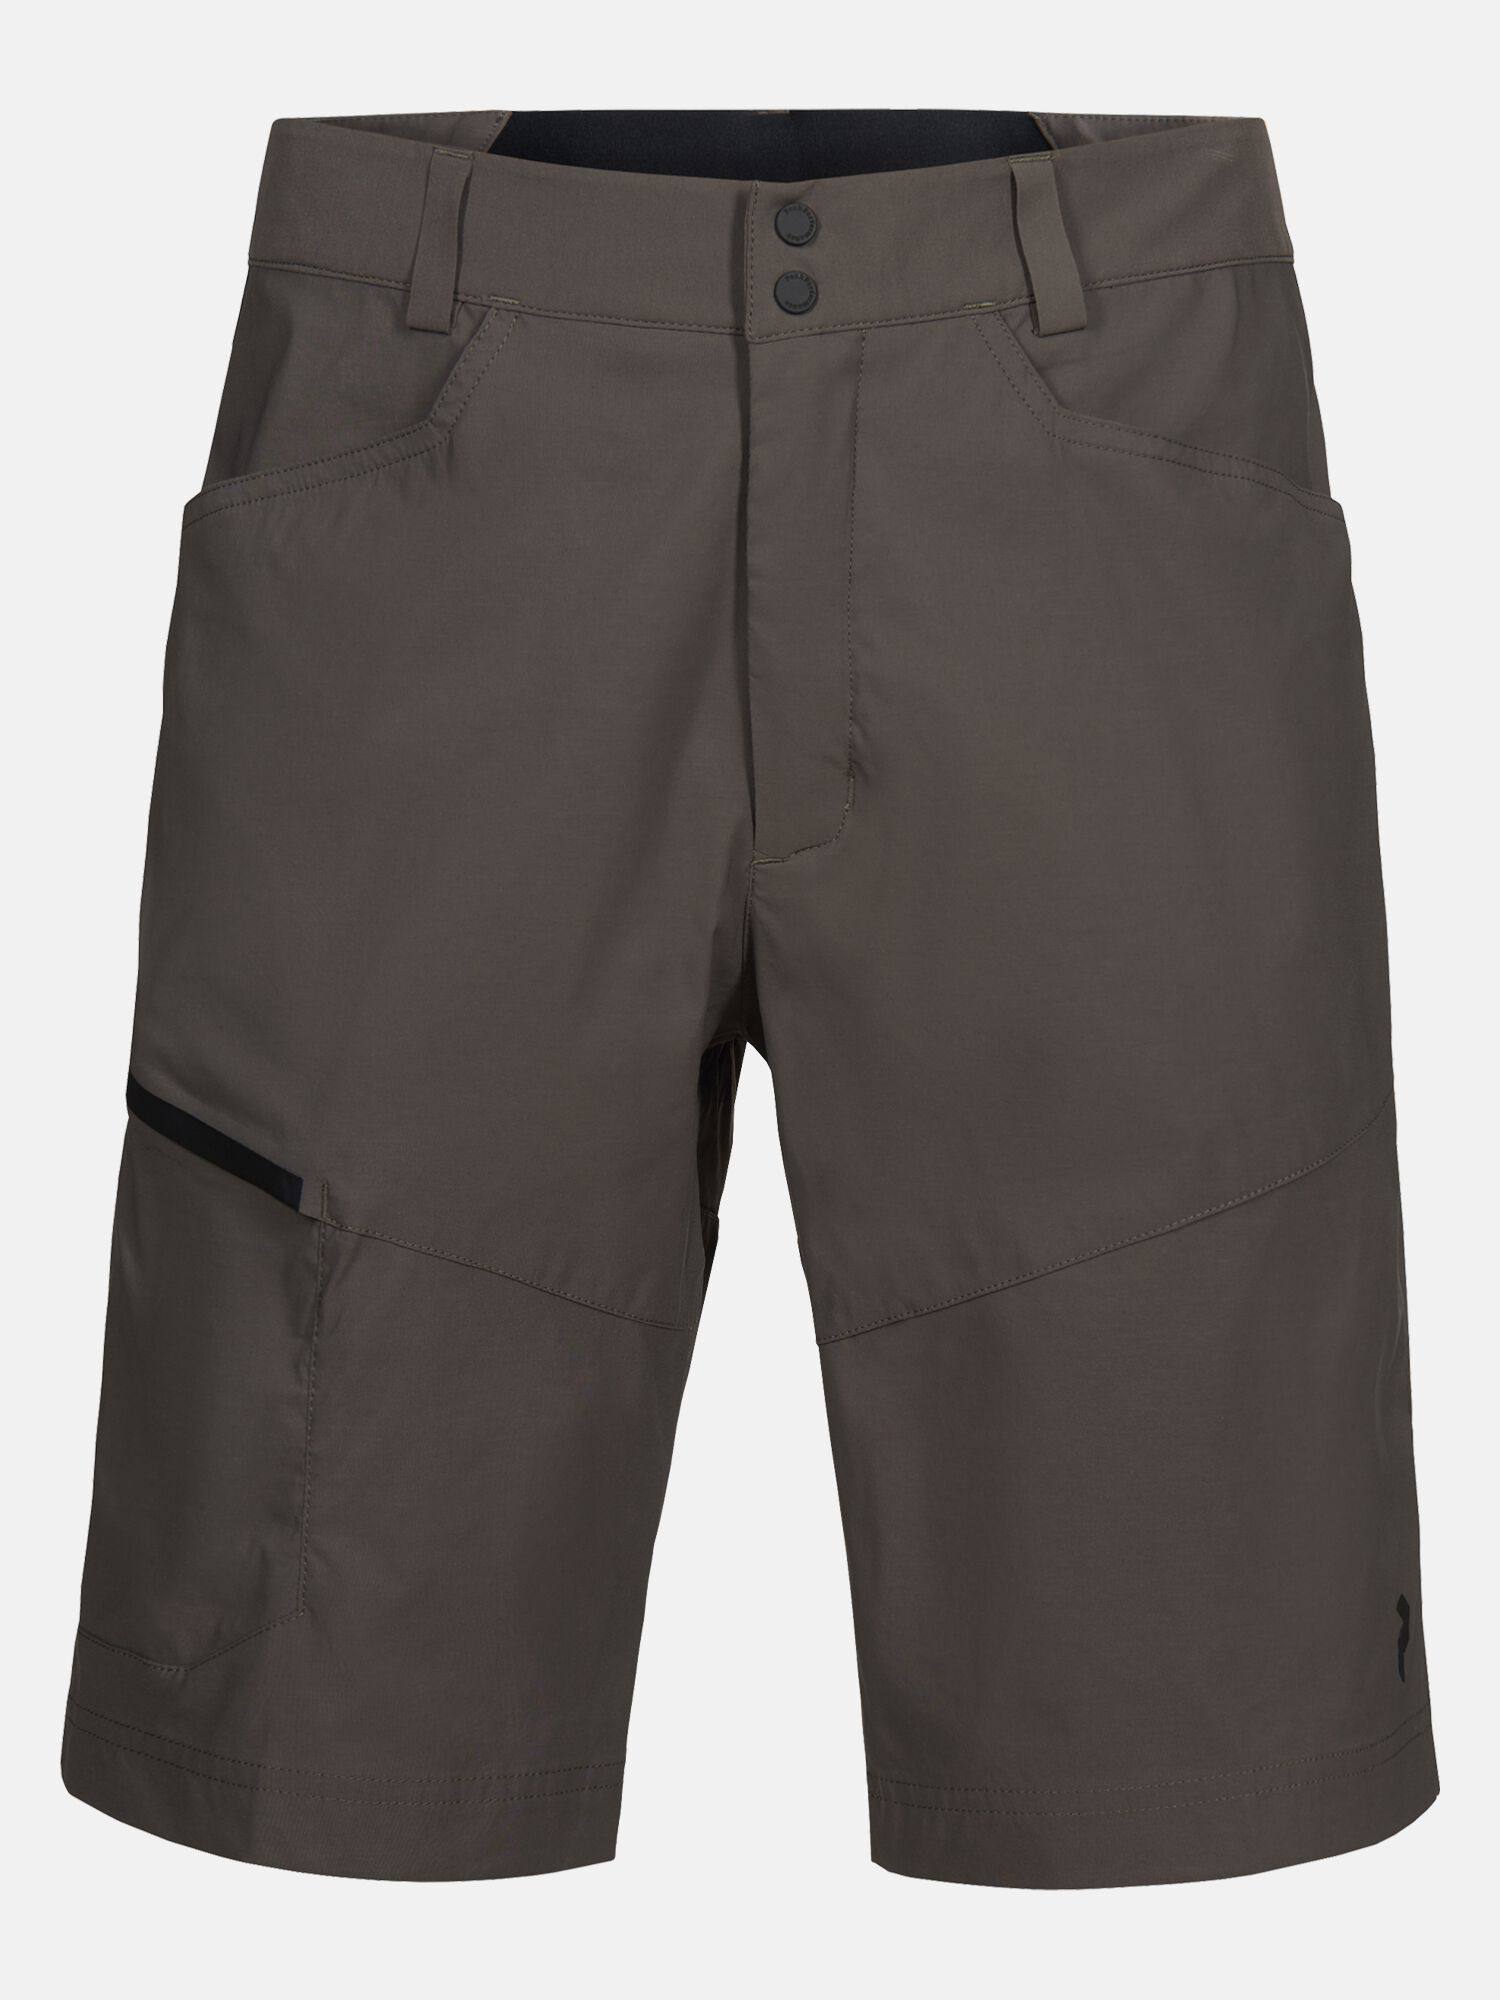 Peak Performance Iconiq Long Shorts Olive XL